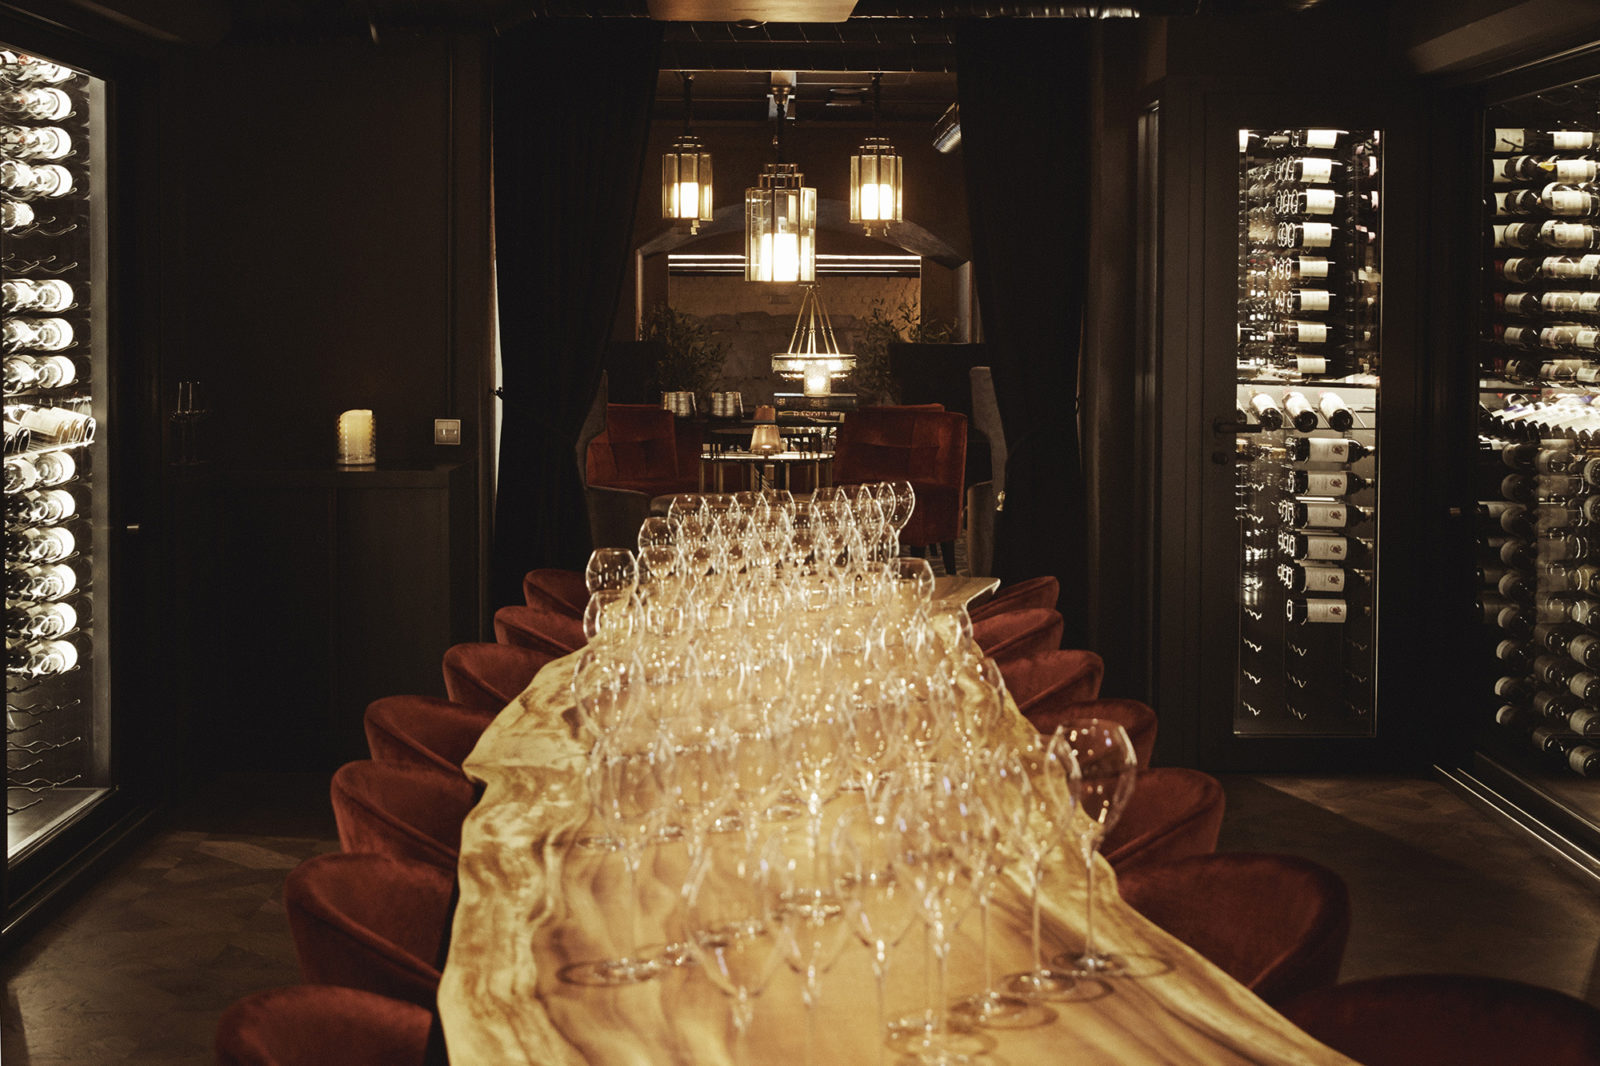 britannia Hotel's wine bar and th tasting room